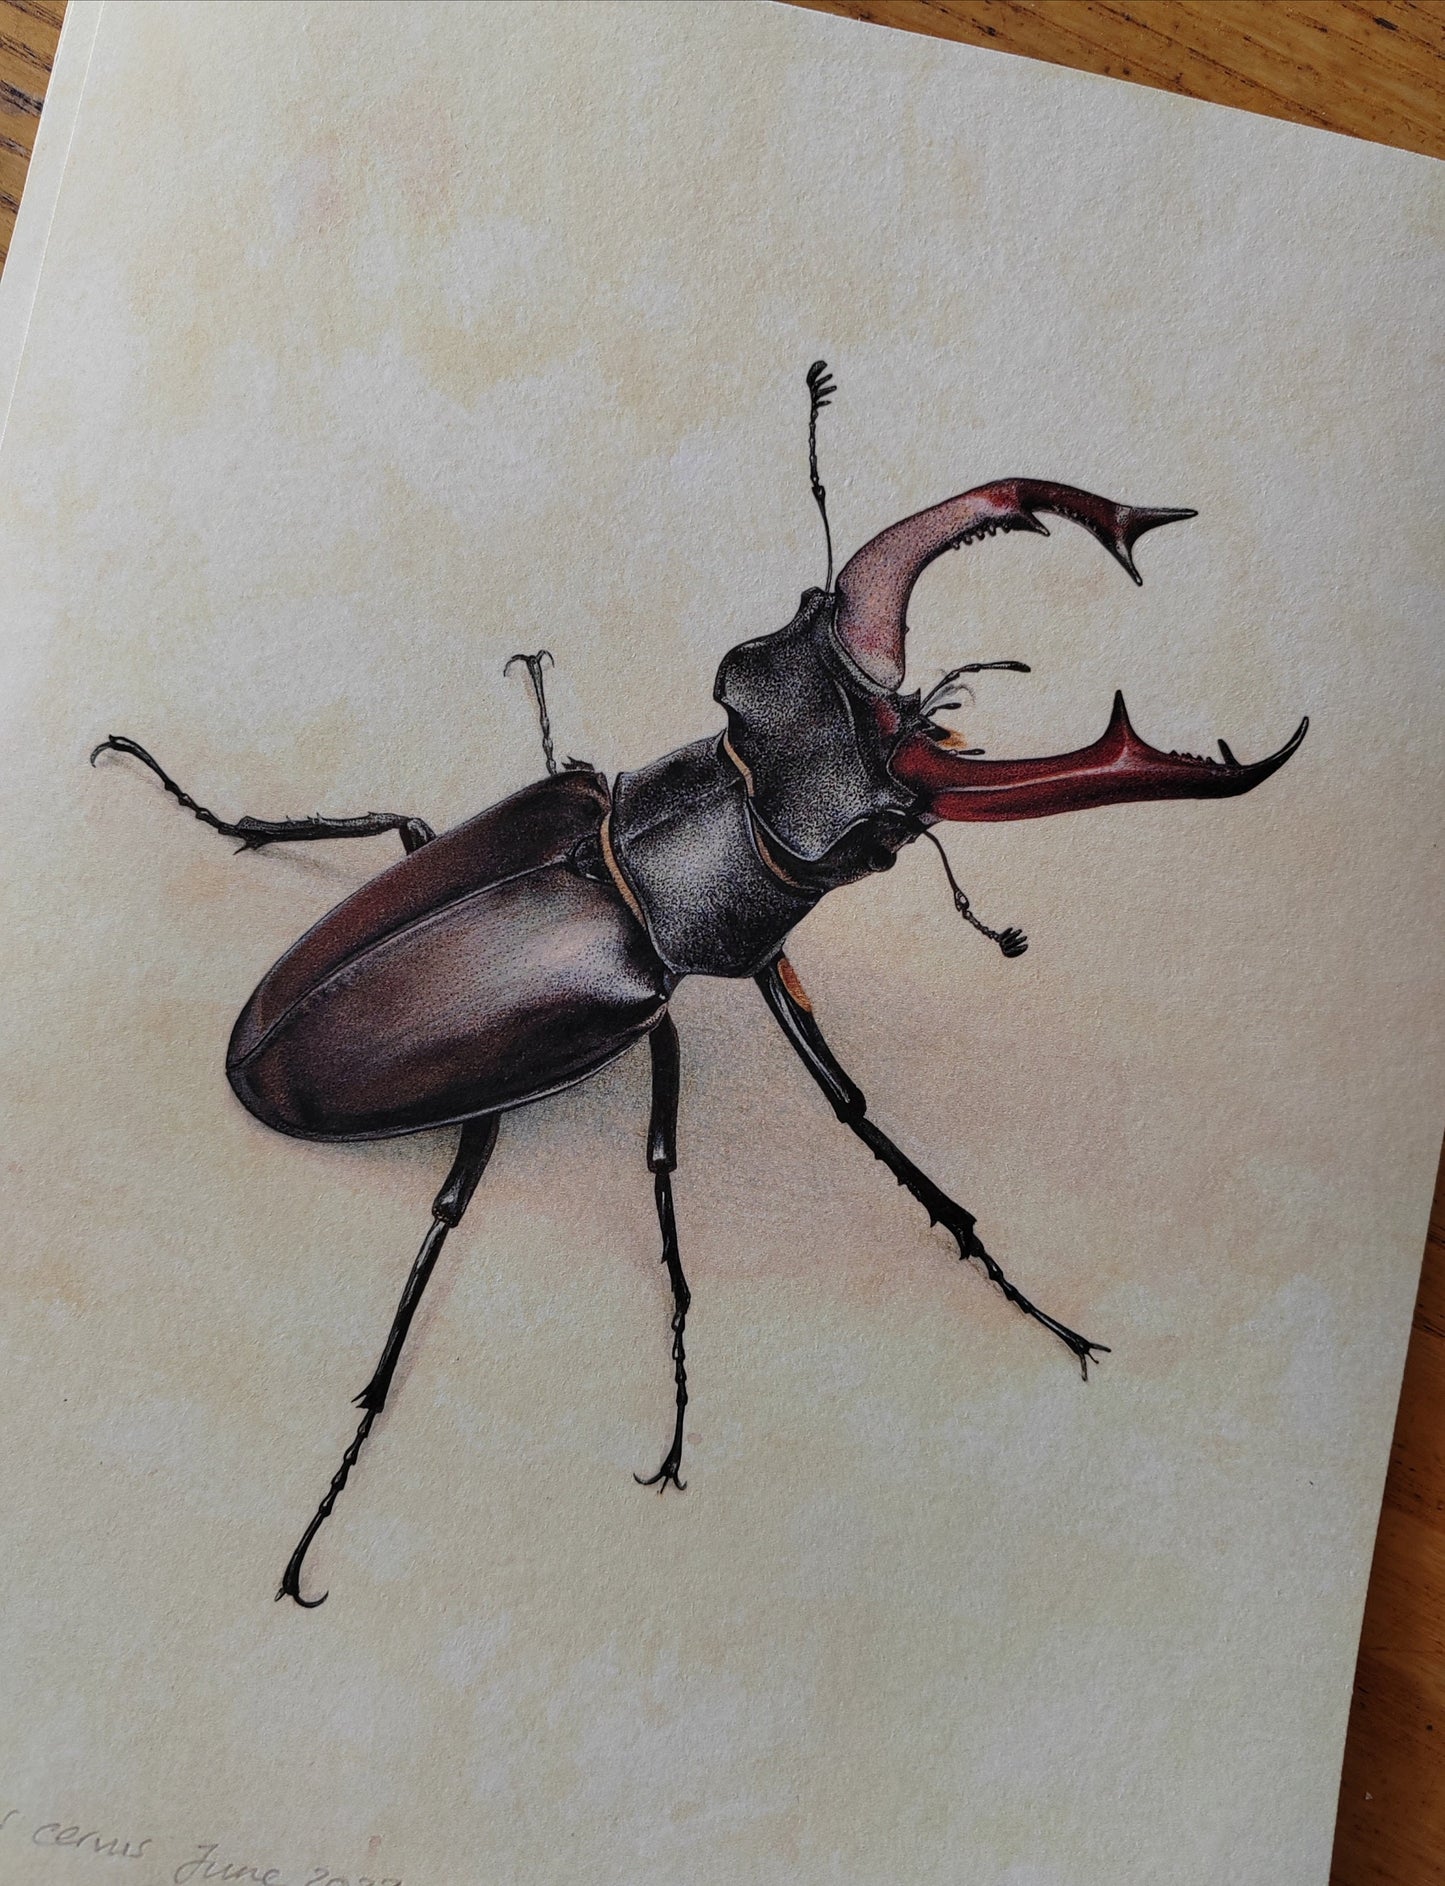 Stag Beetle, Lucanus cervus limited edition art print 10x8"